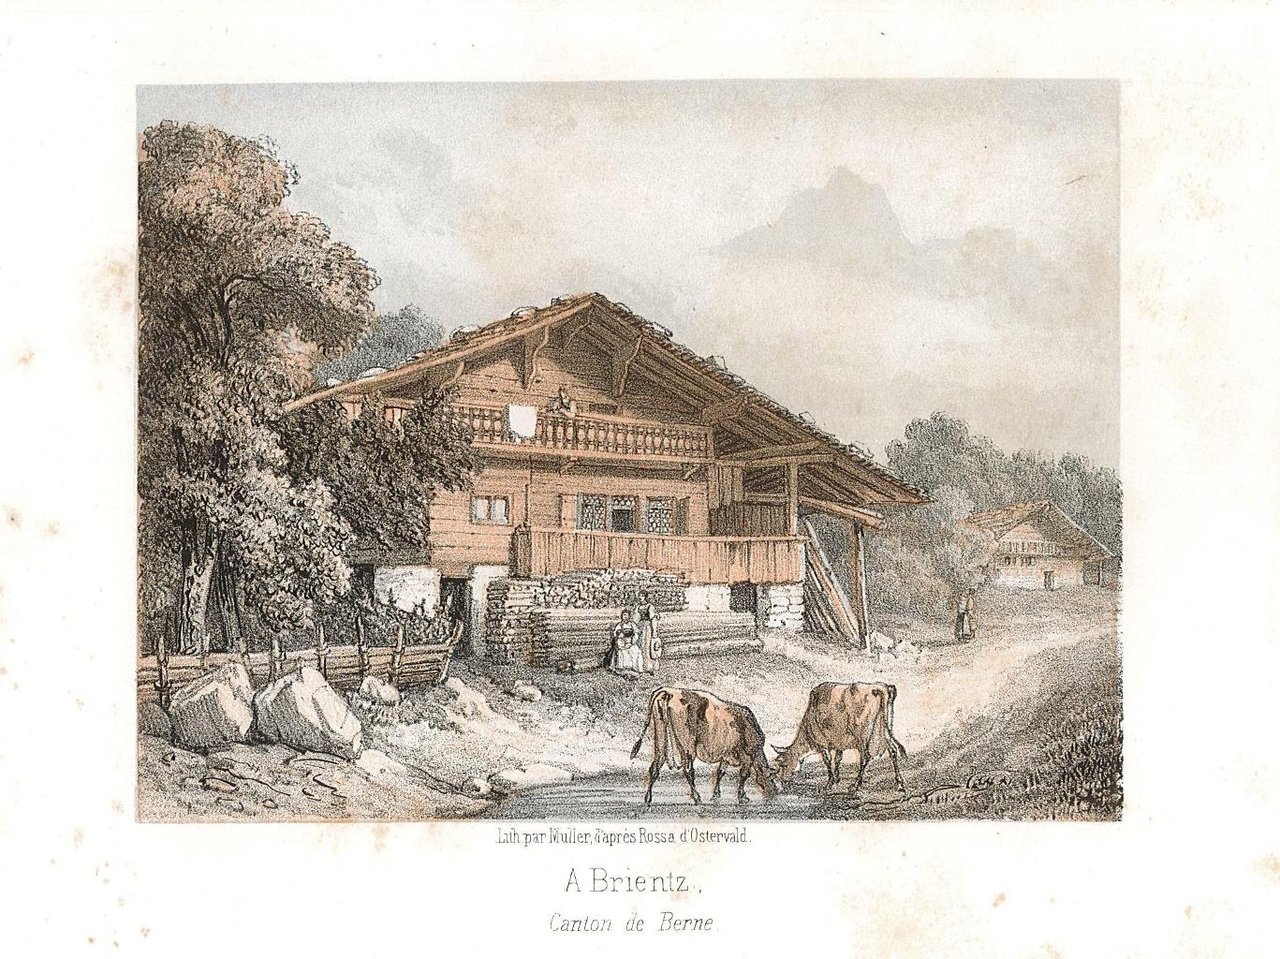 A Brientz Canton de Berne